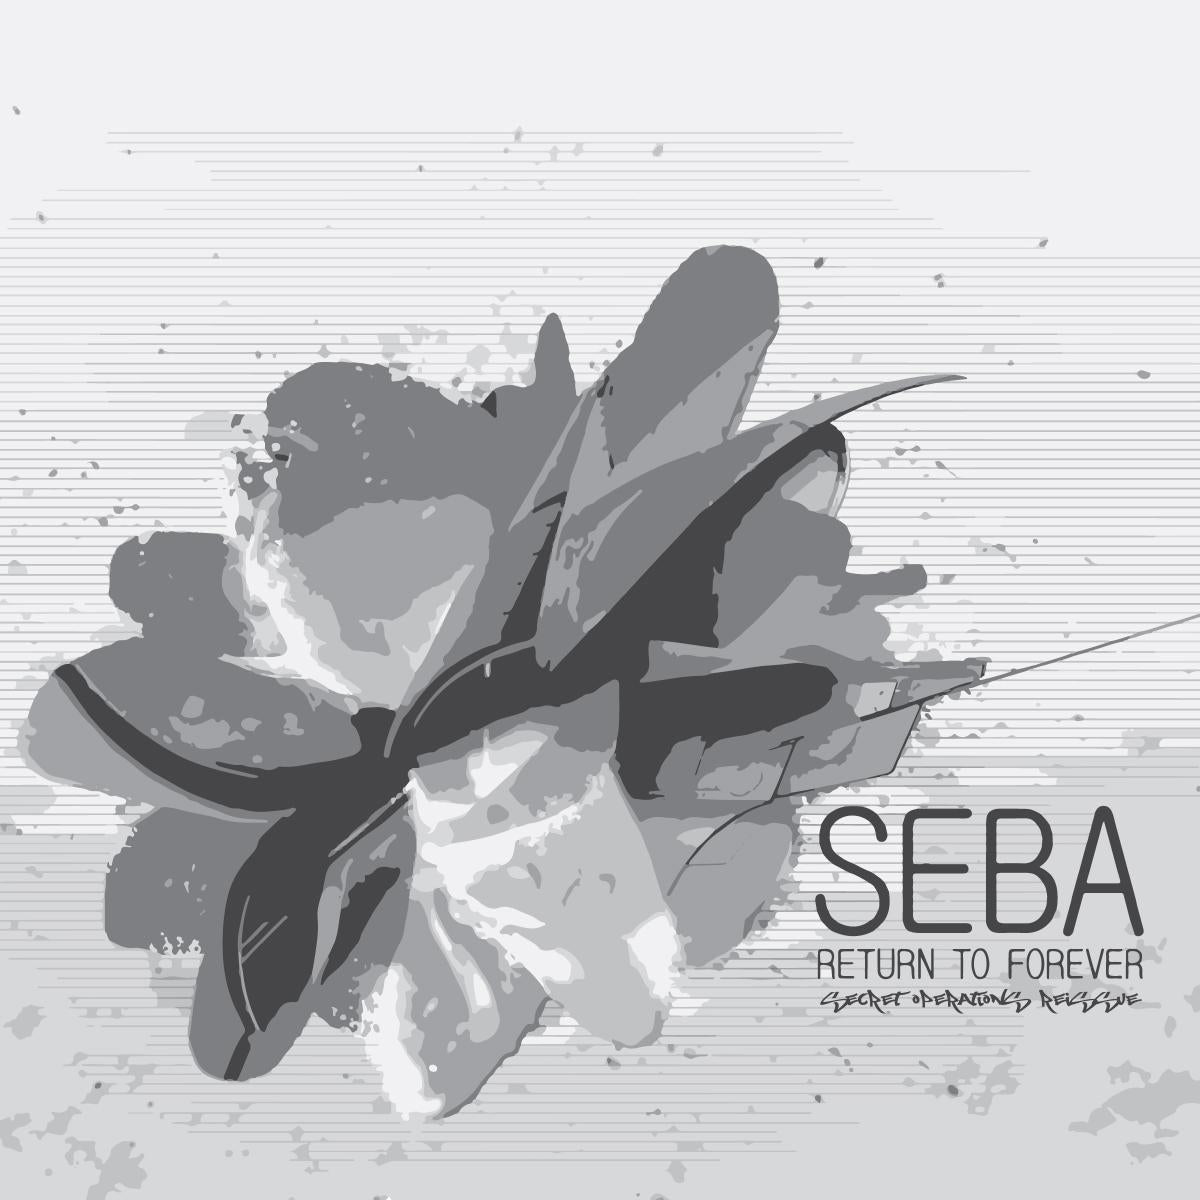 SEBA 'SECRET OPERATIONS REISSUE - VOL 4' 12"